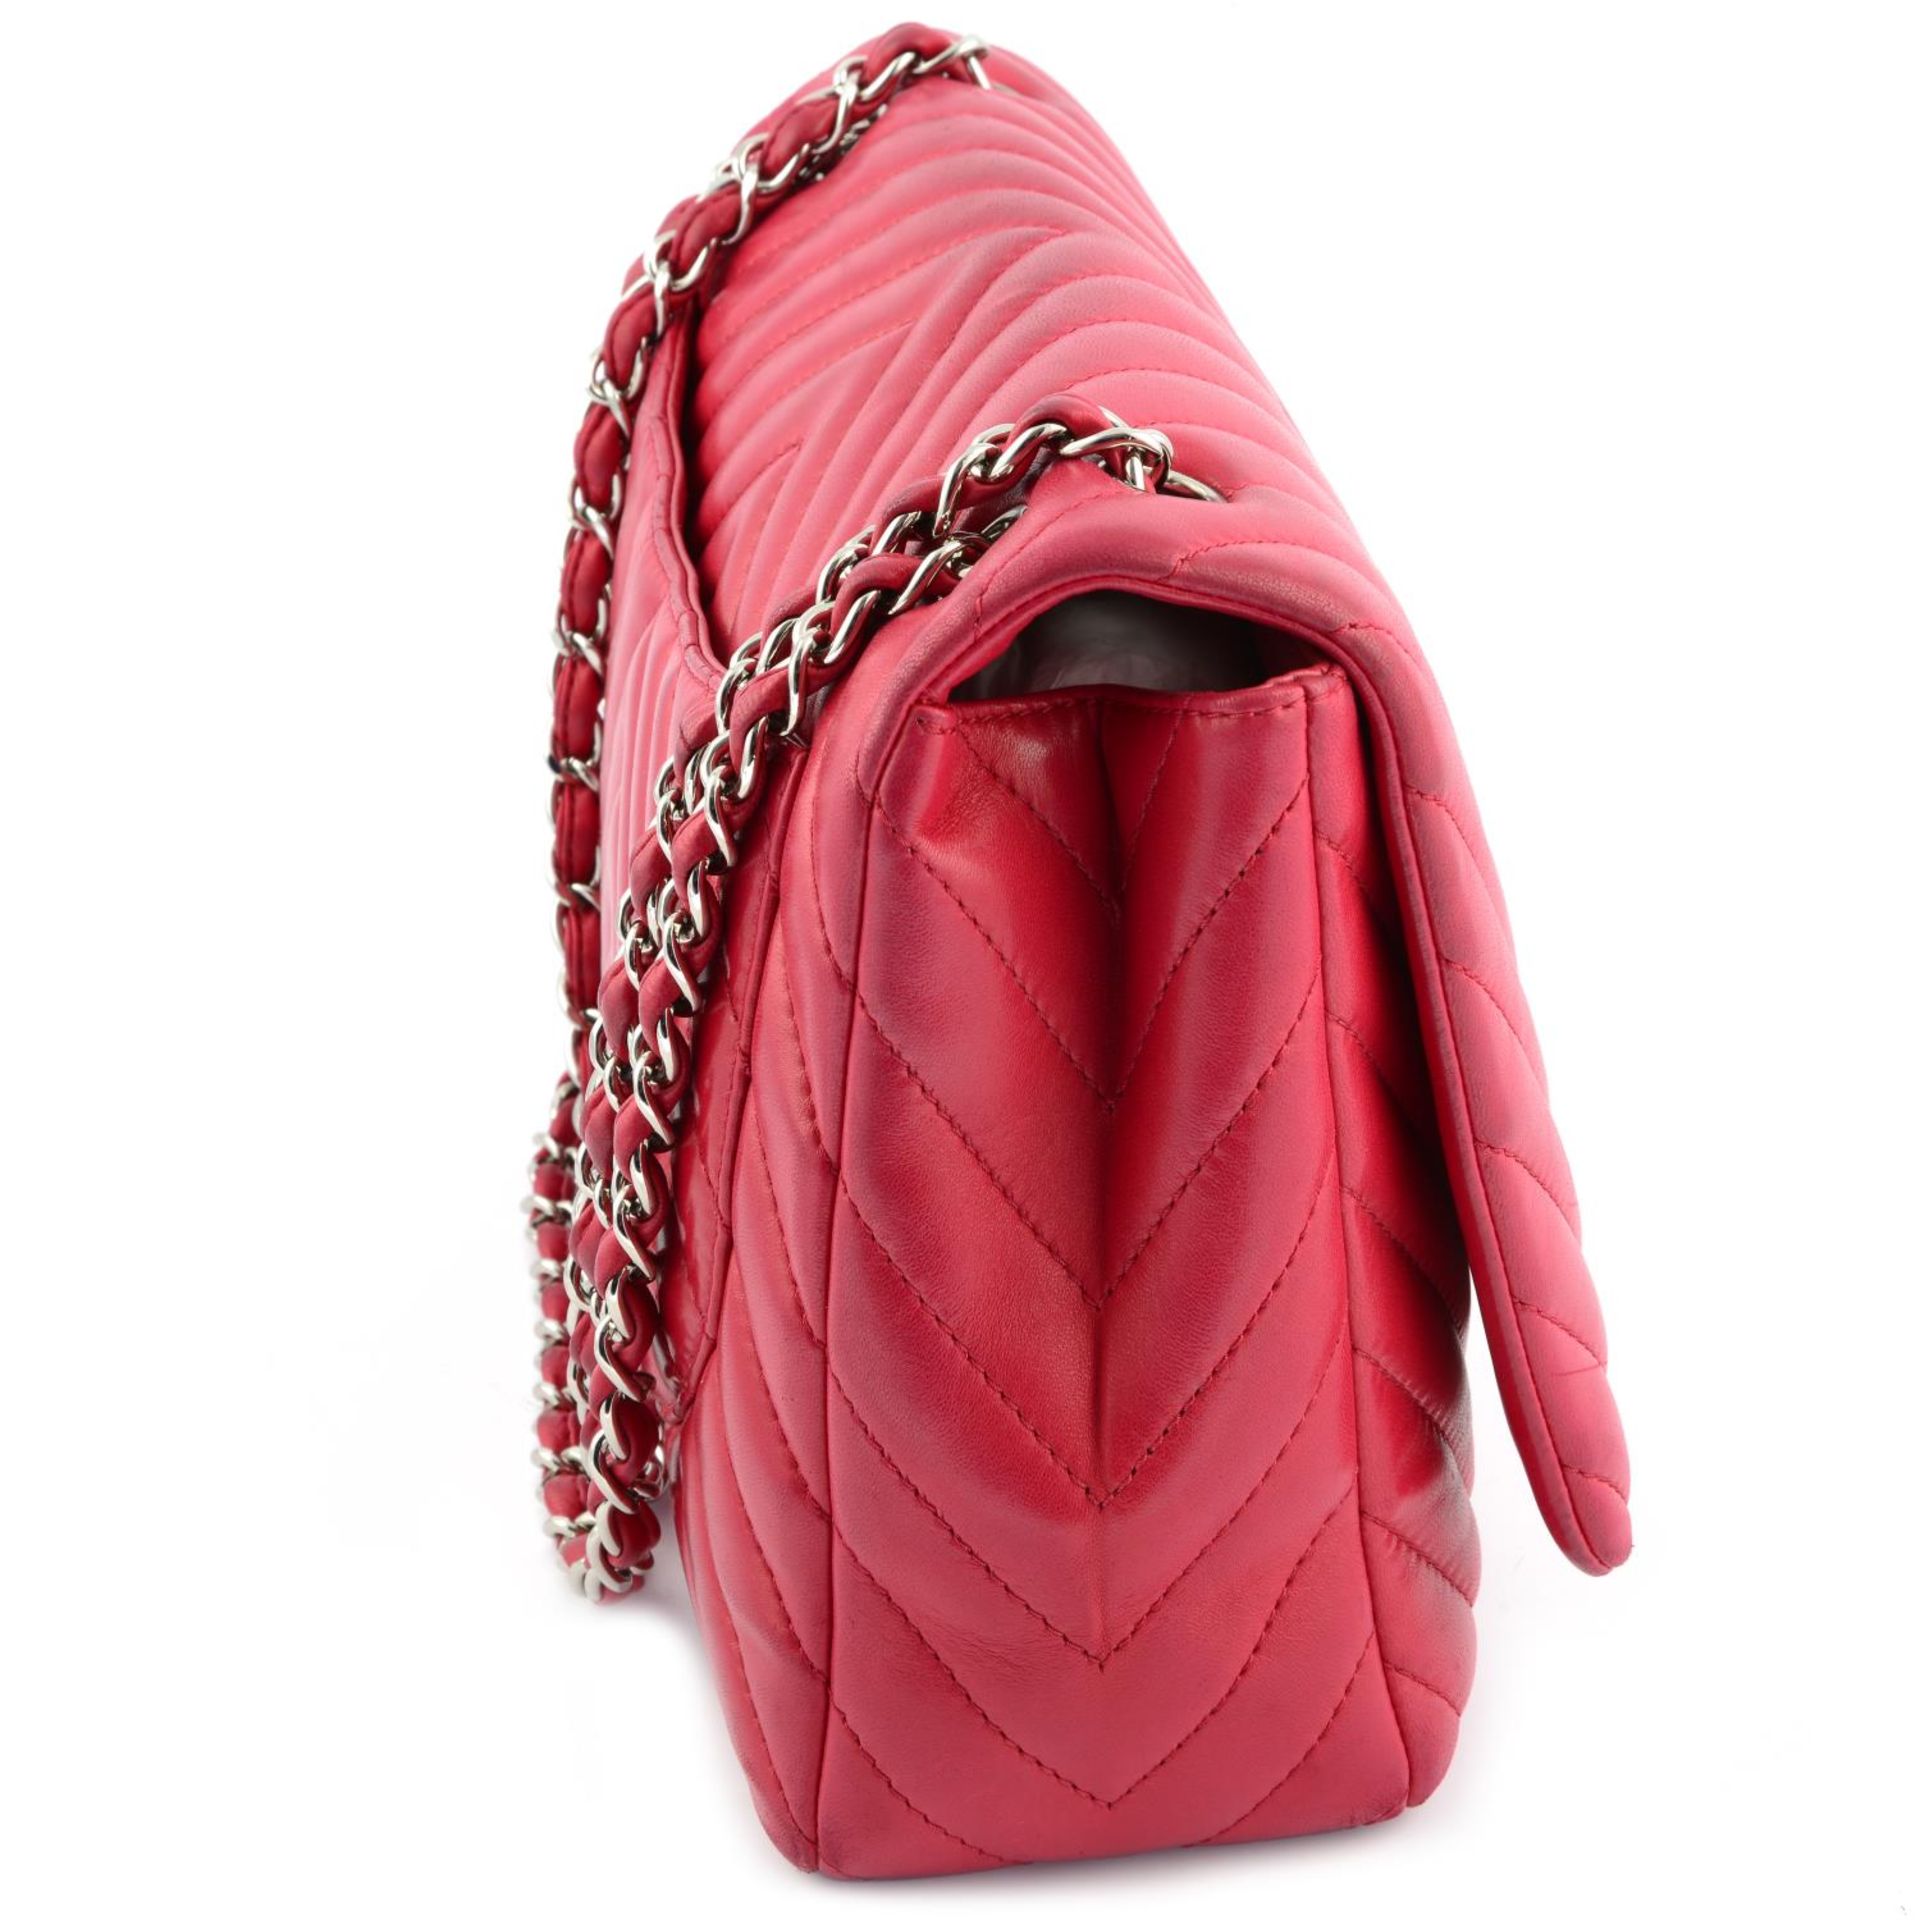 CHANEL - an amaranth red Maxi Classic Flap handbag. - Image 4 of 7